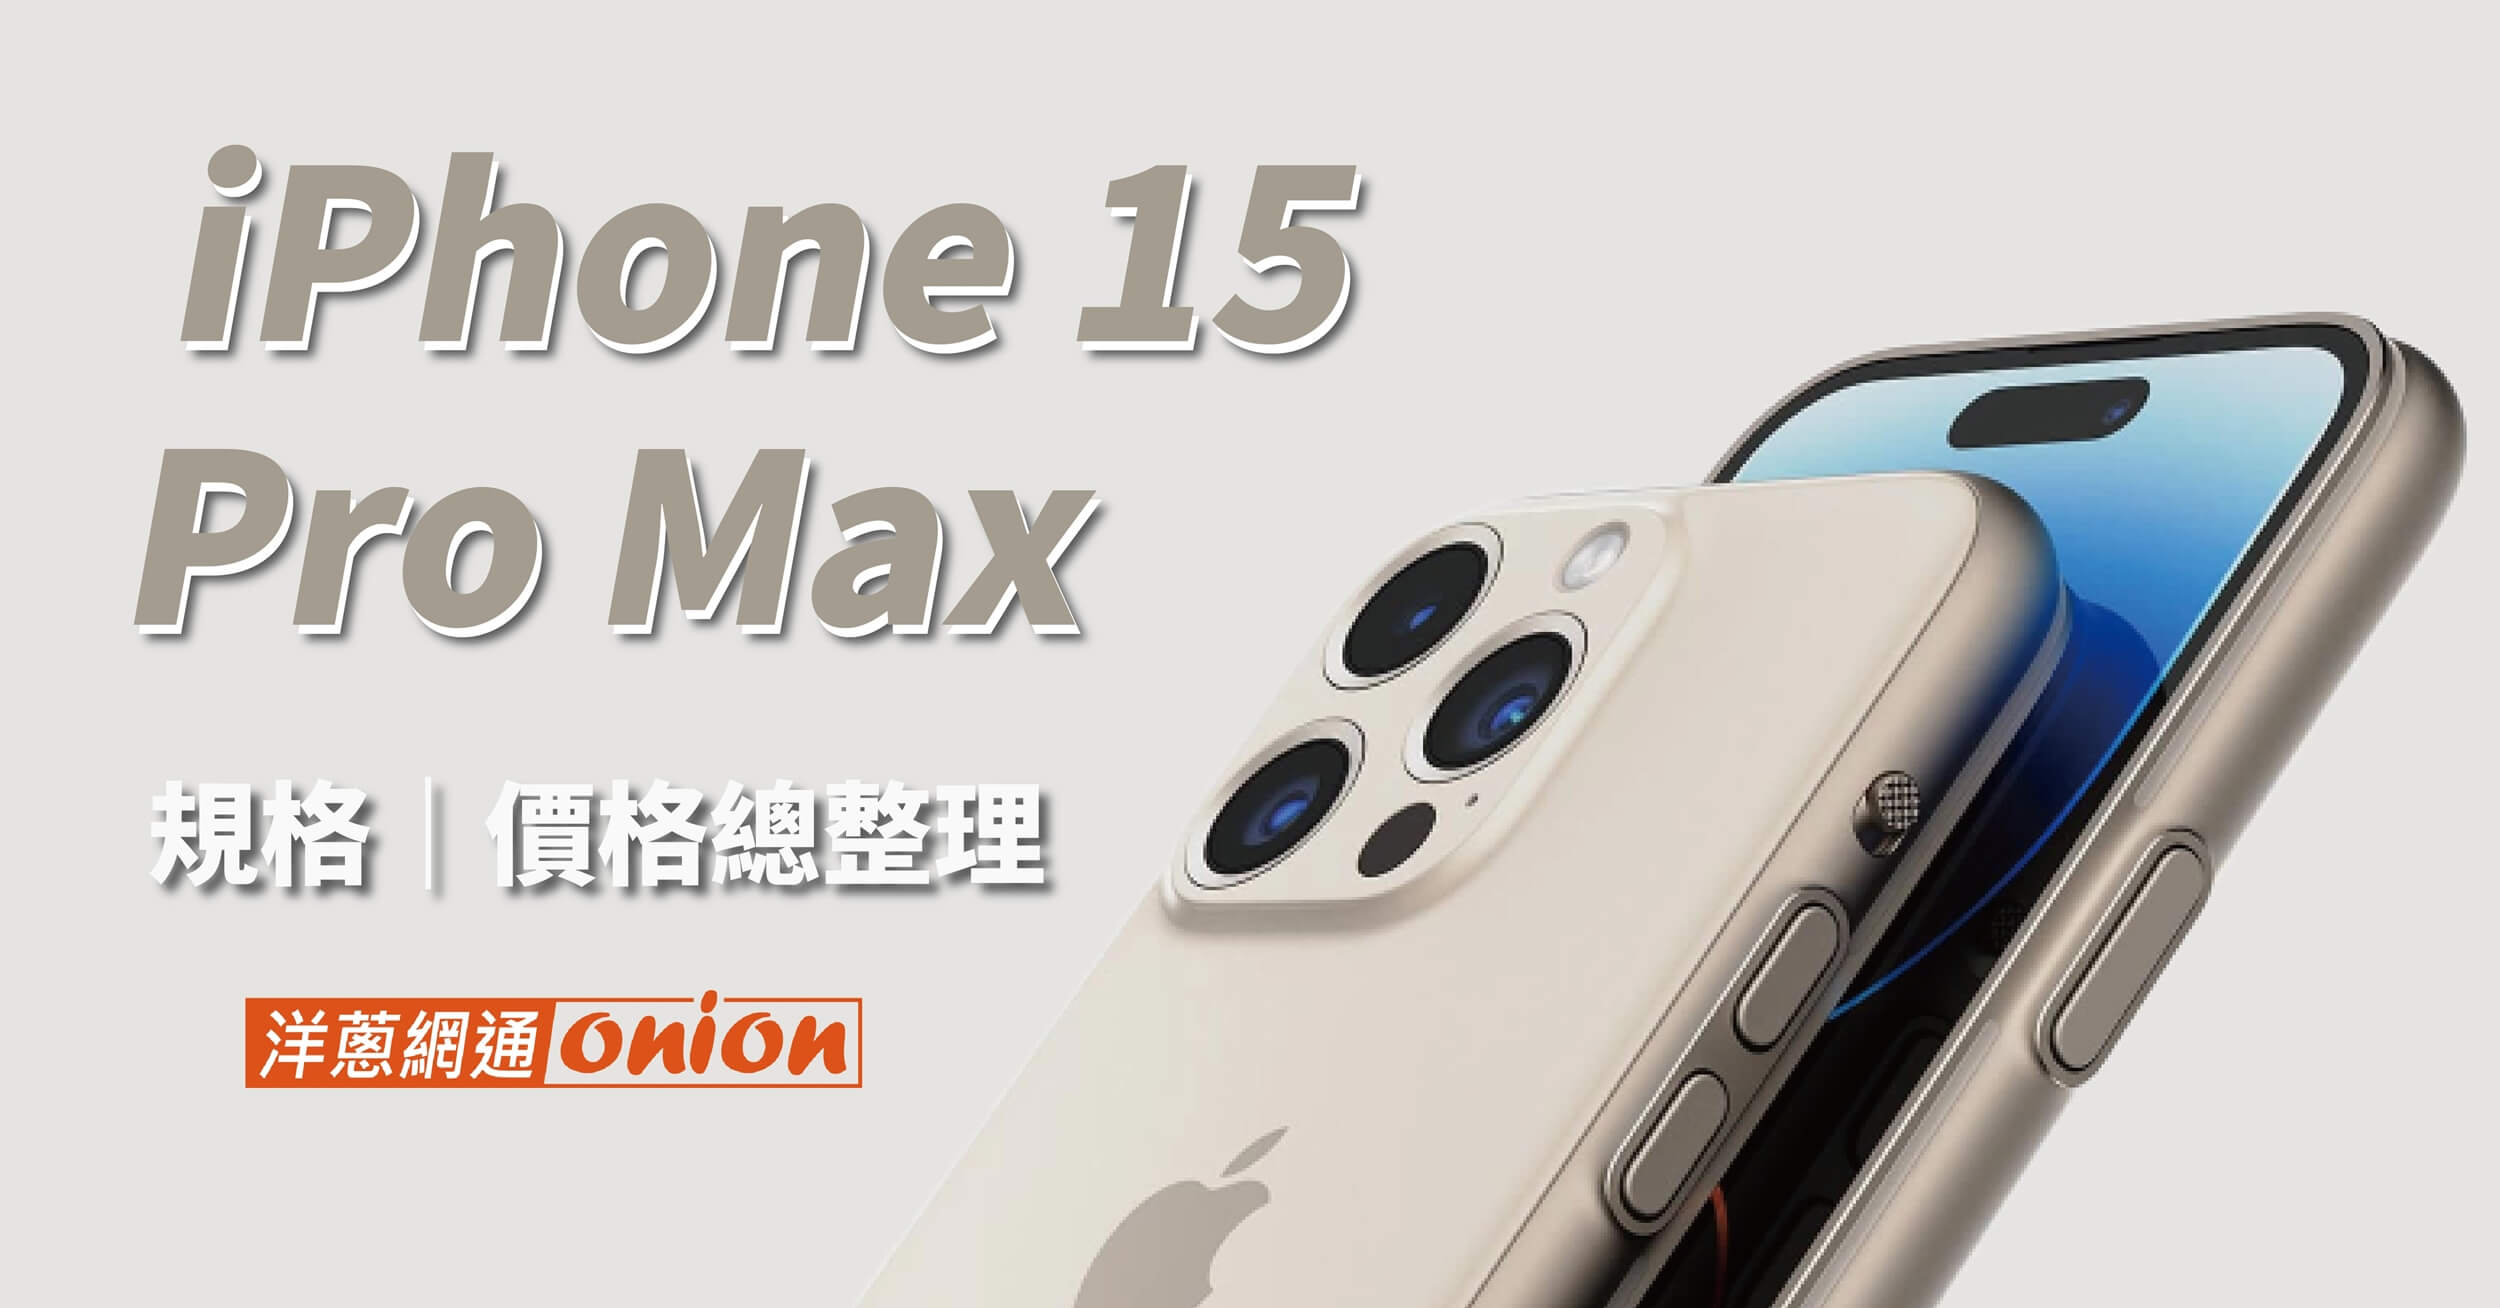 iPhone 15 Pro Max 價格、規格、相機鏡頭等4大重點升級整理